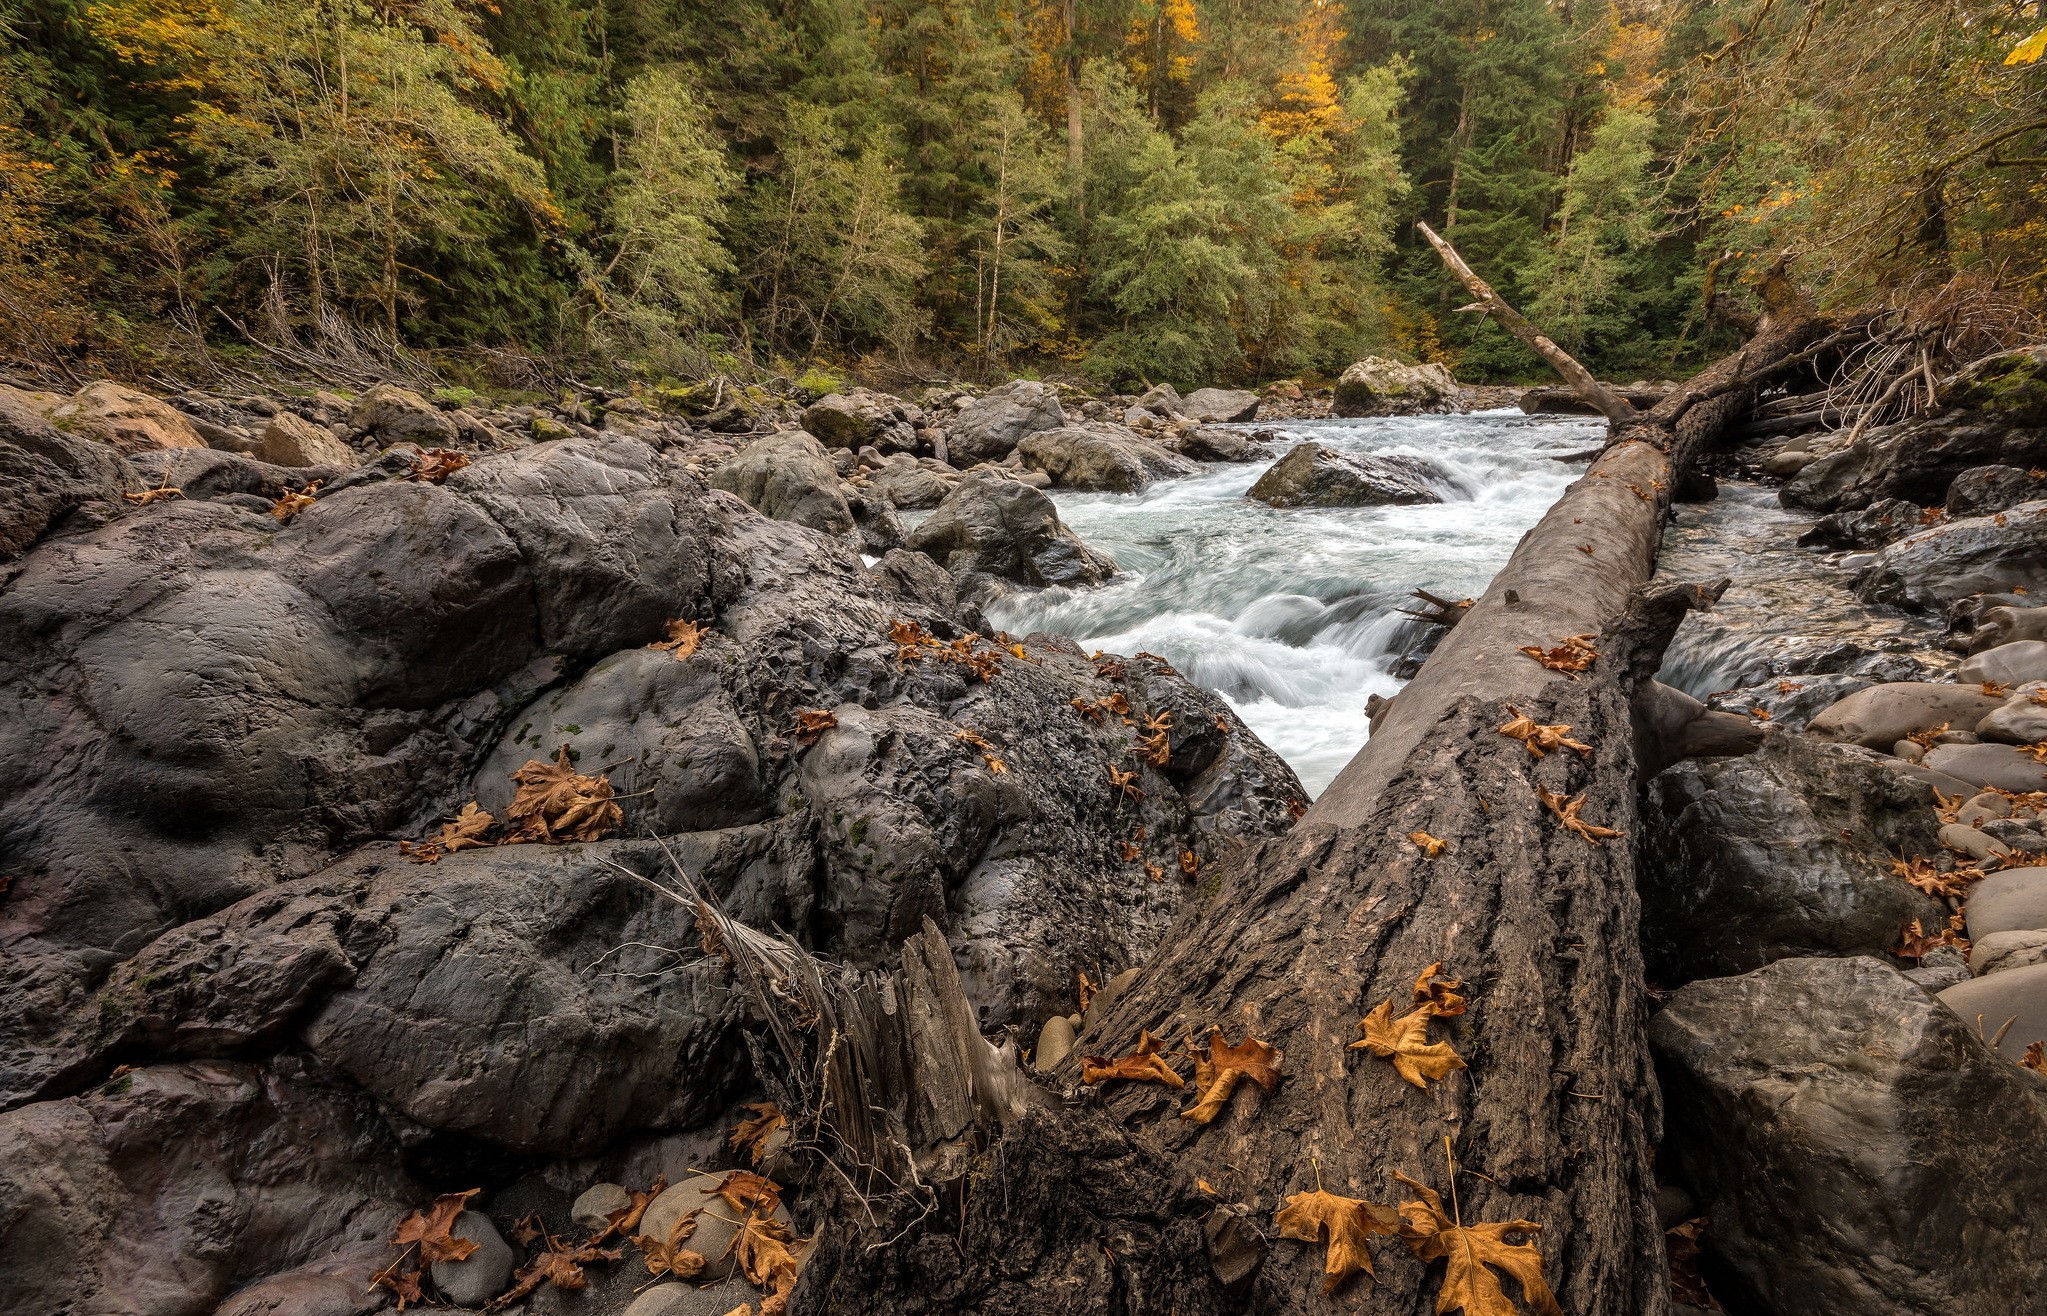 General 2047x1316 river creeks wilderness rocks forest dead trees stones wood nature fallen leaves